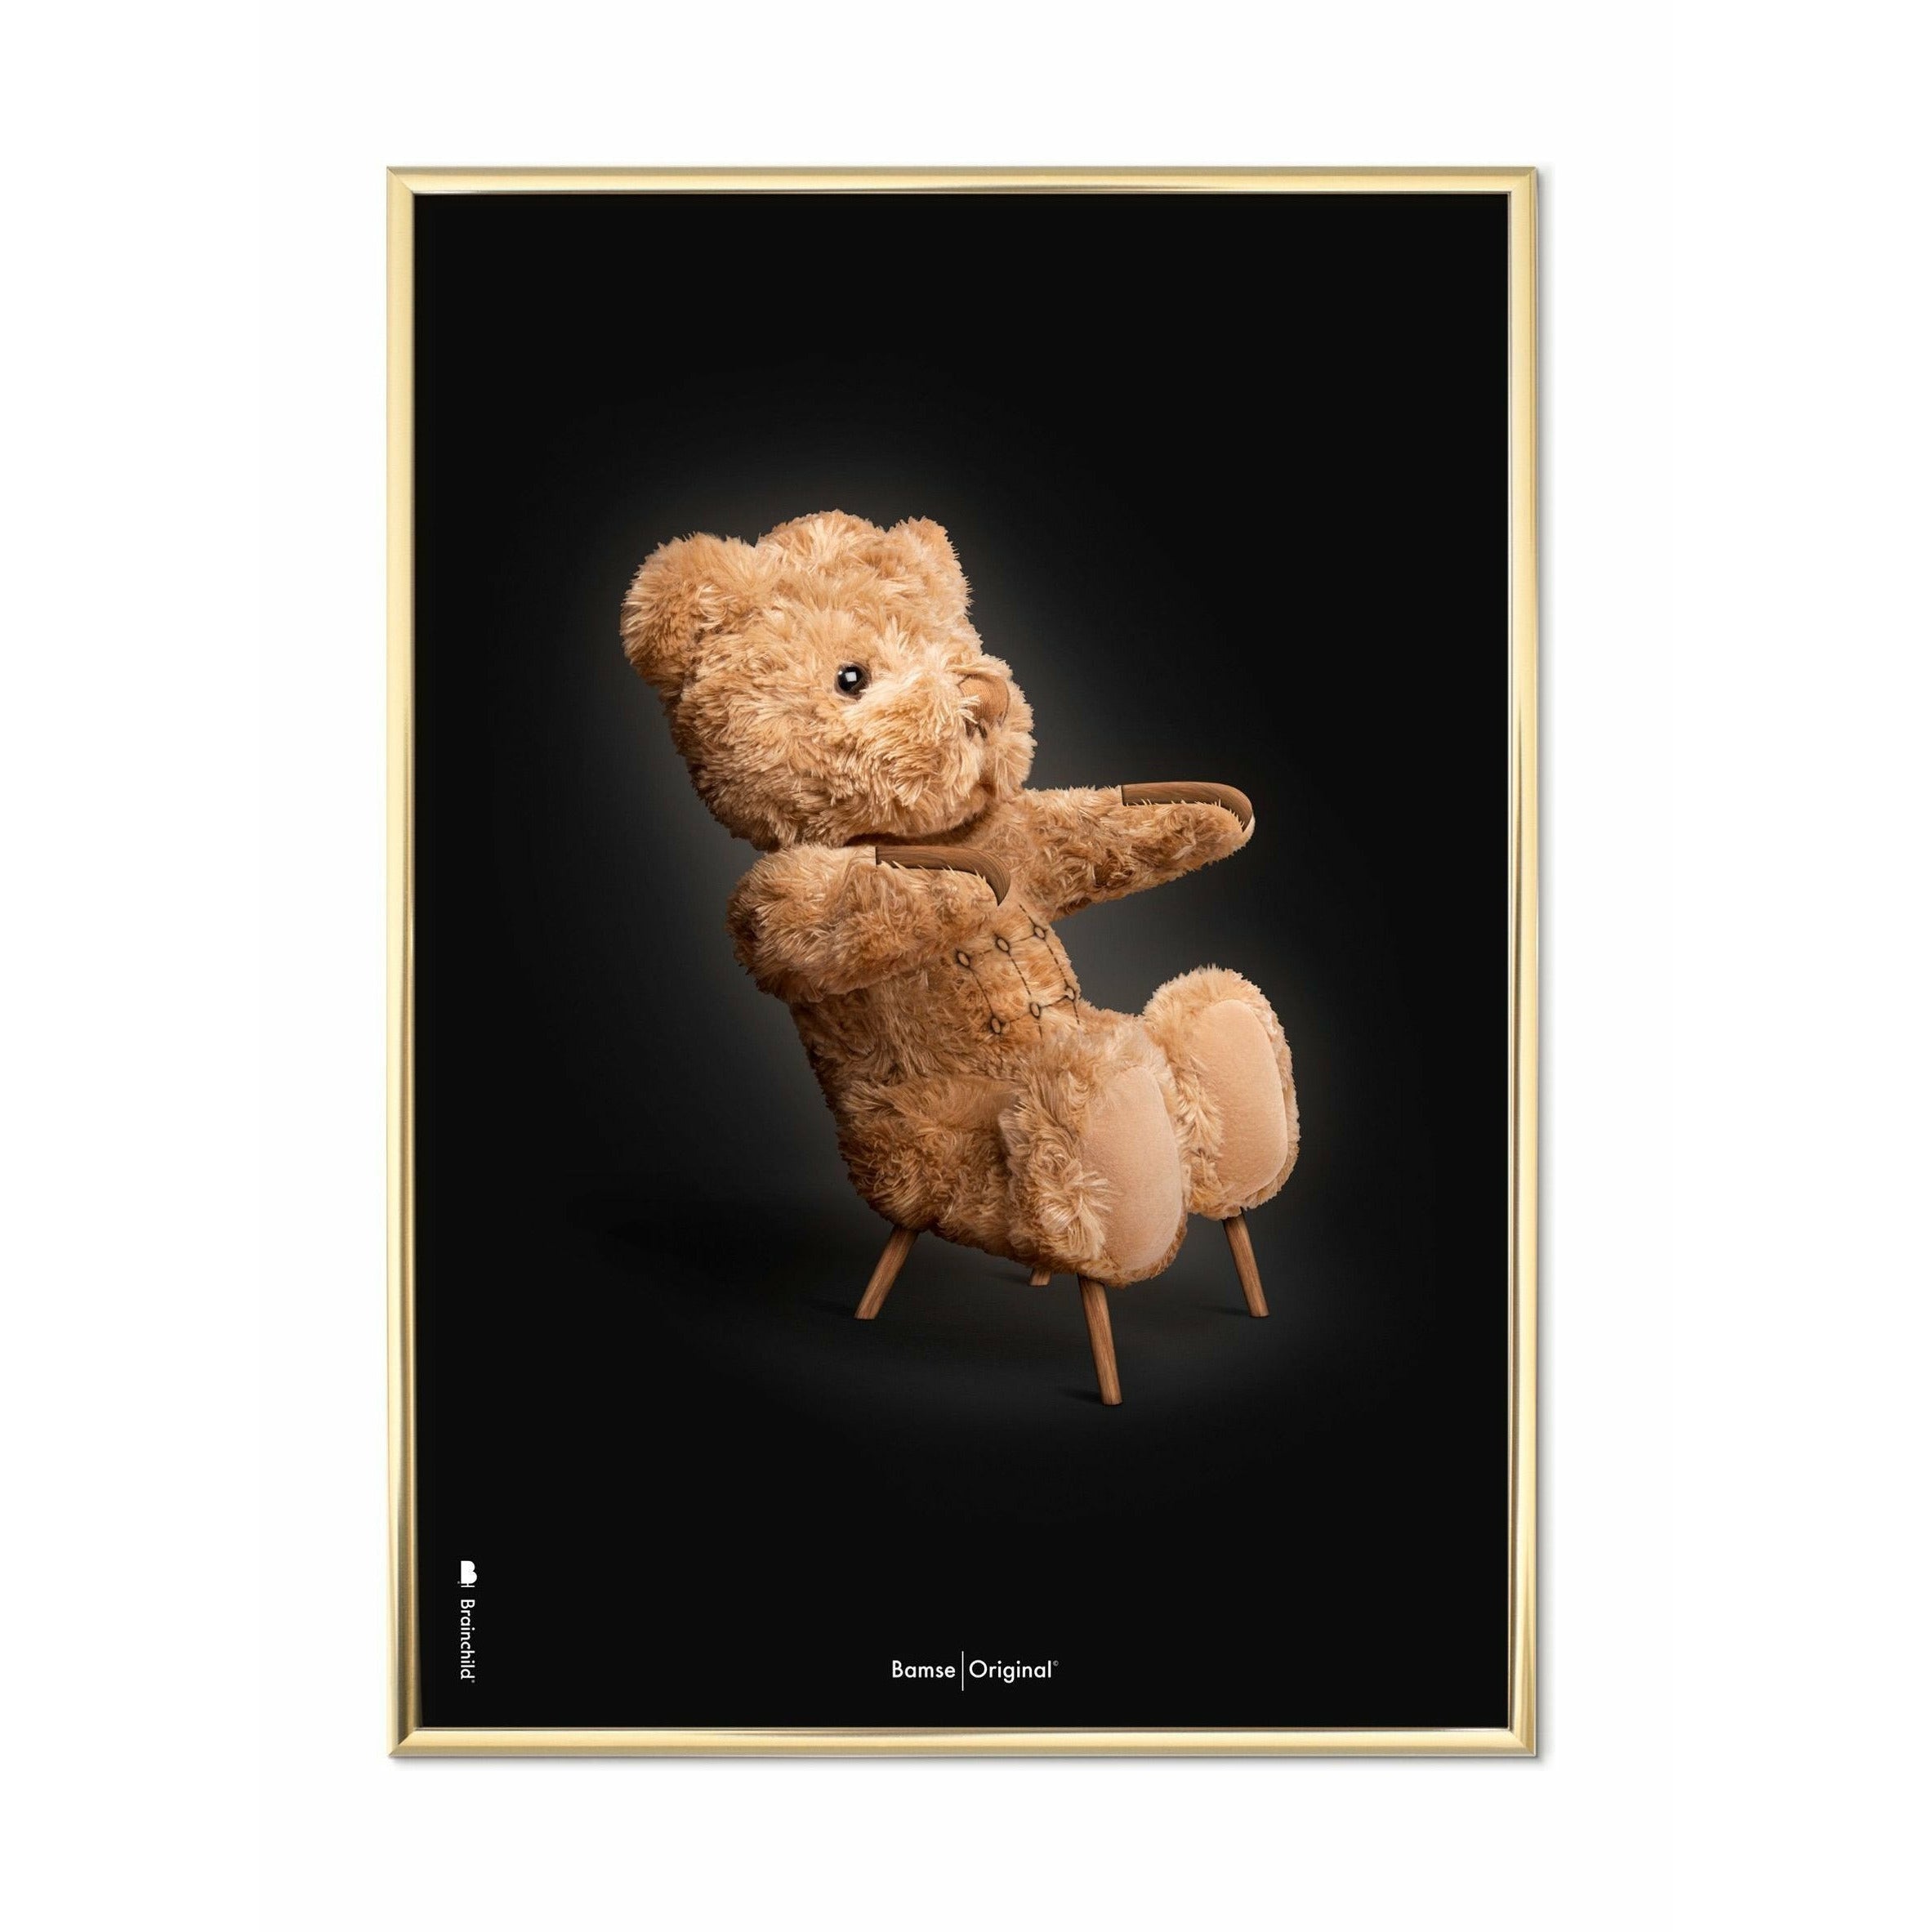 Brainchild Teddy Bear Classic Poster, Brass Colored Frame 30x40 Cm, Black Background